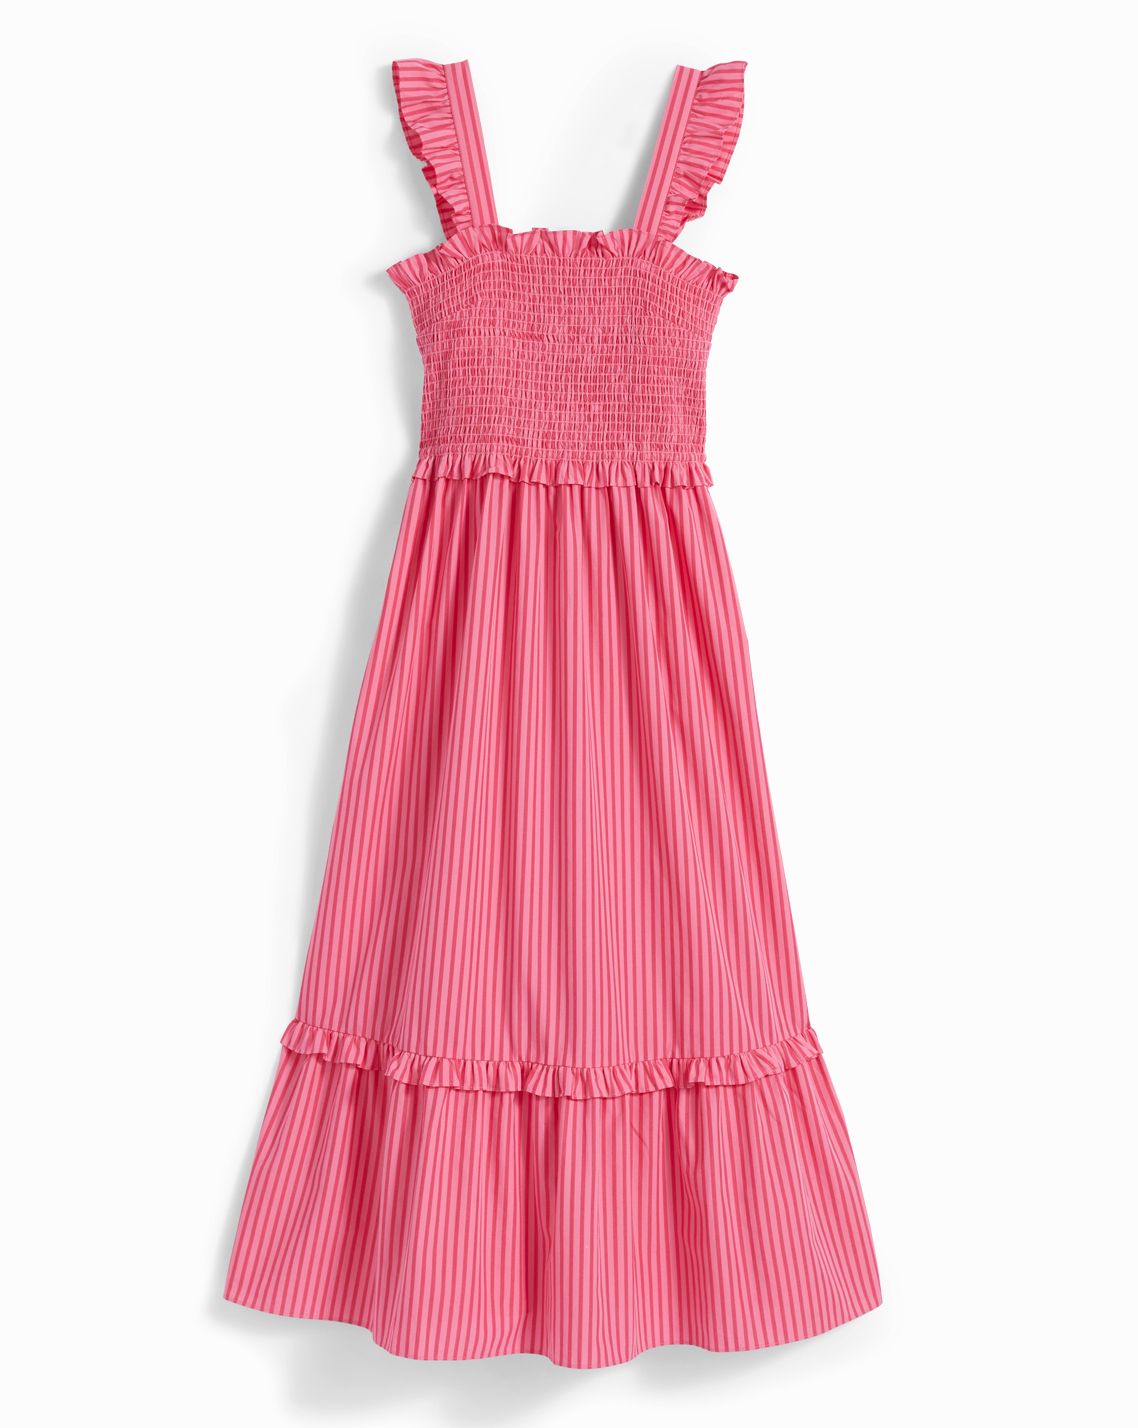 Kimberly Smocked Midi Dress in Pink Stripe